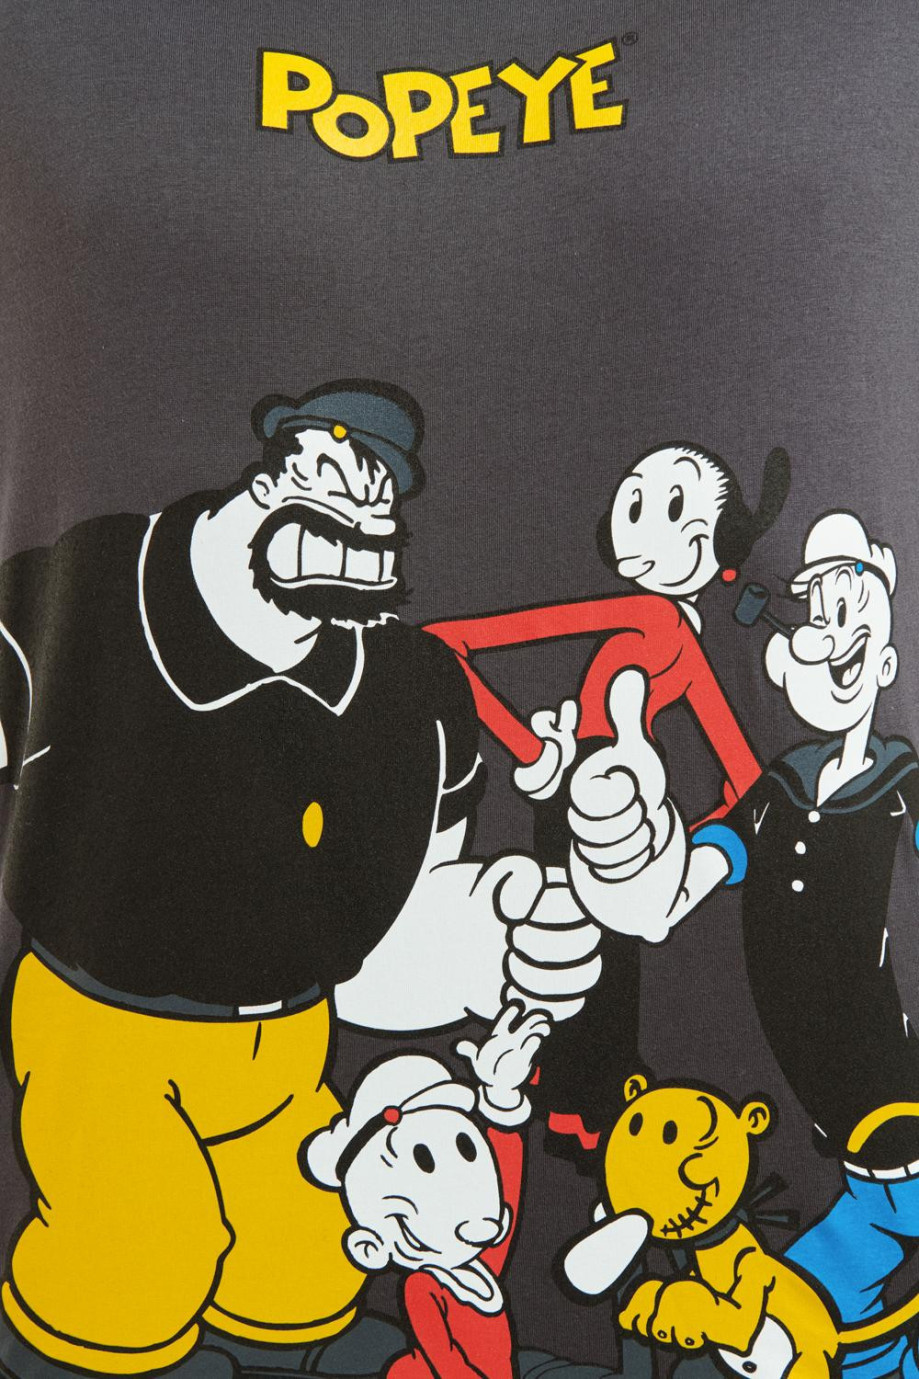 Camiseta manga corta gris intenso con estampado de Popeye.